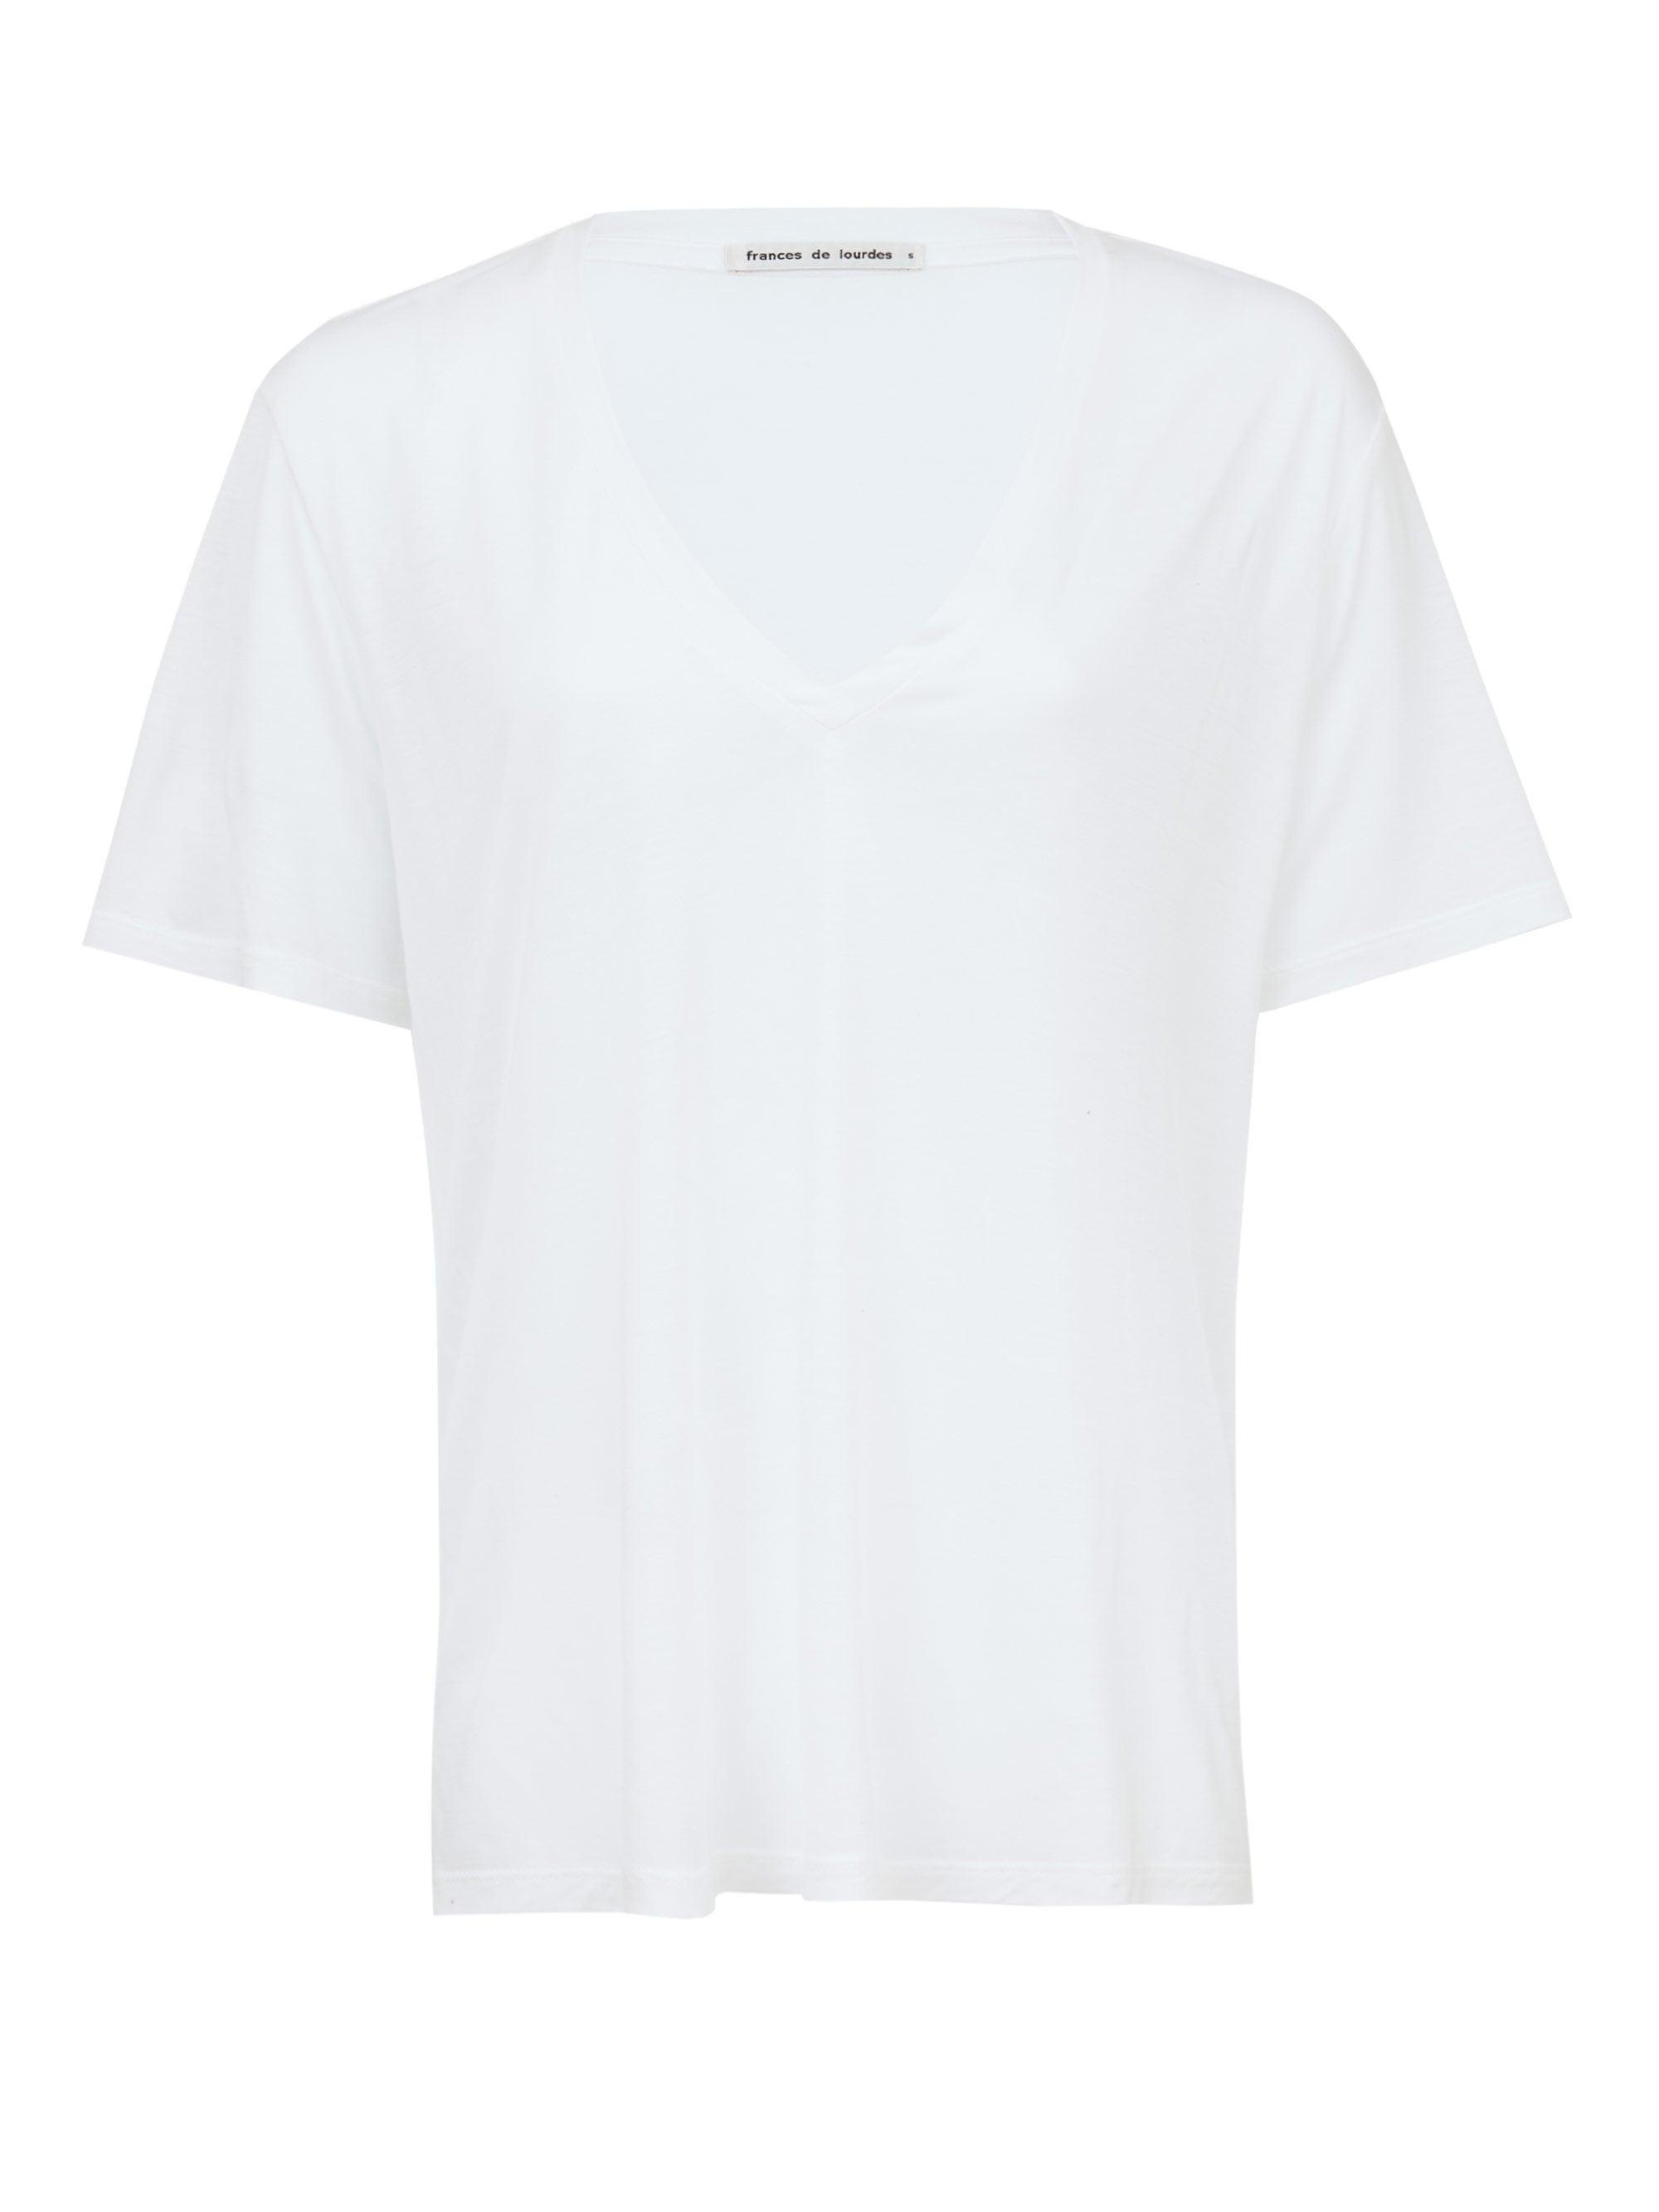 Frances de Lourdes Synthetic Frankie V-neck Jersey T-shirt in White - Lyst